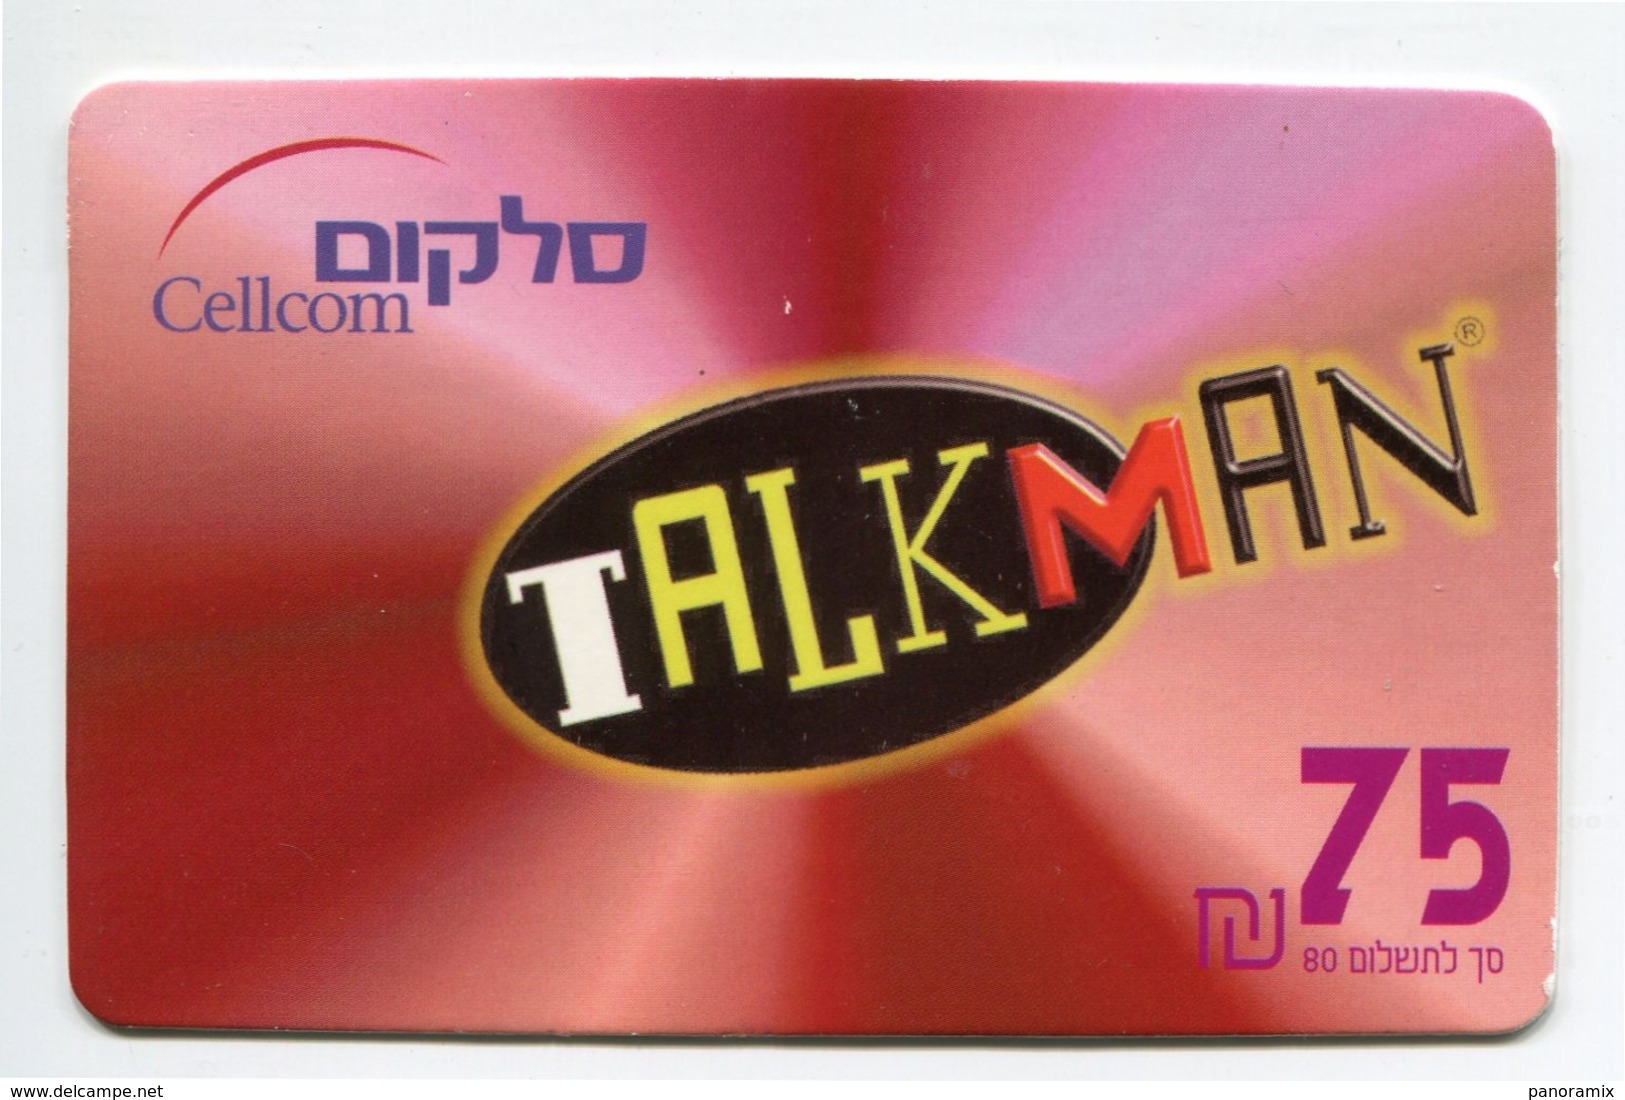 Telecarte Prépayée °_ Israel-Cellcom-Talkman.75- R/V 9039 - Israel